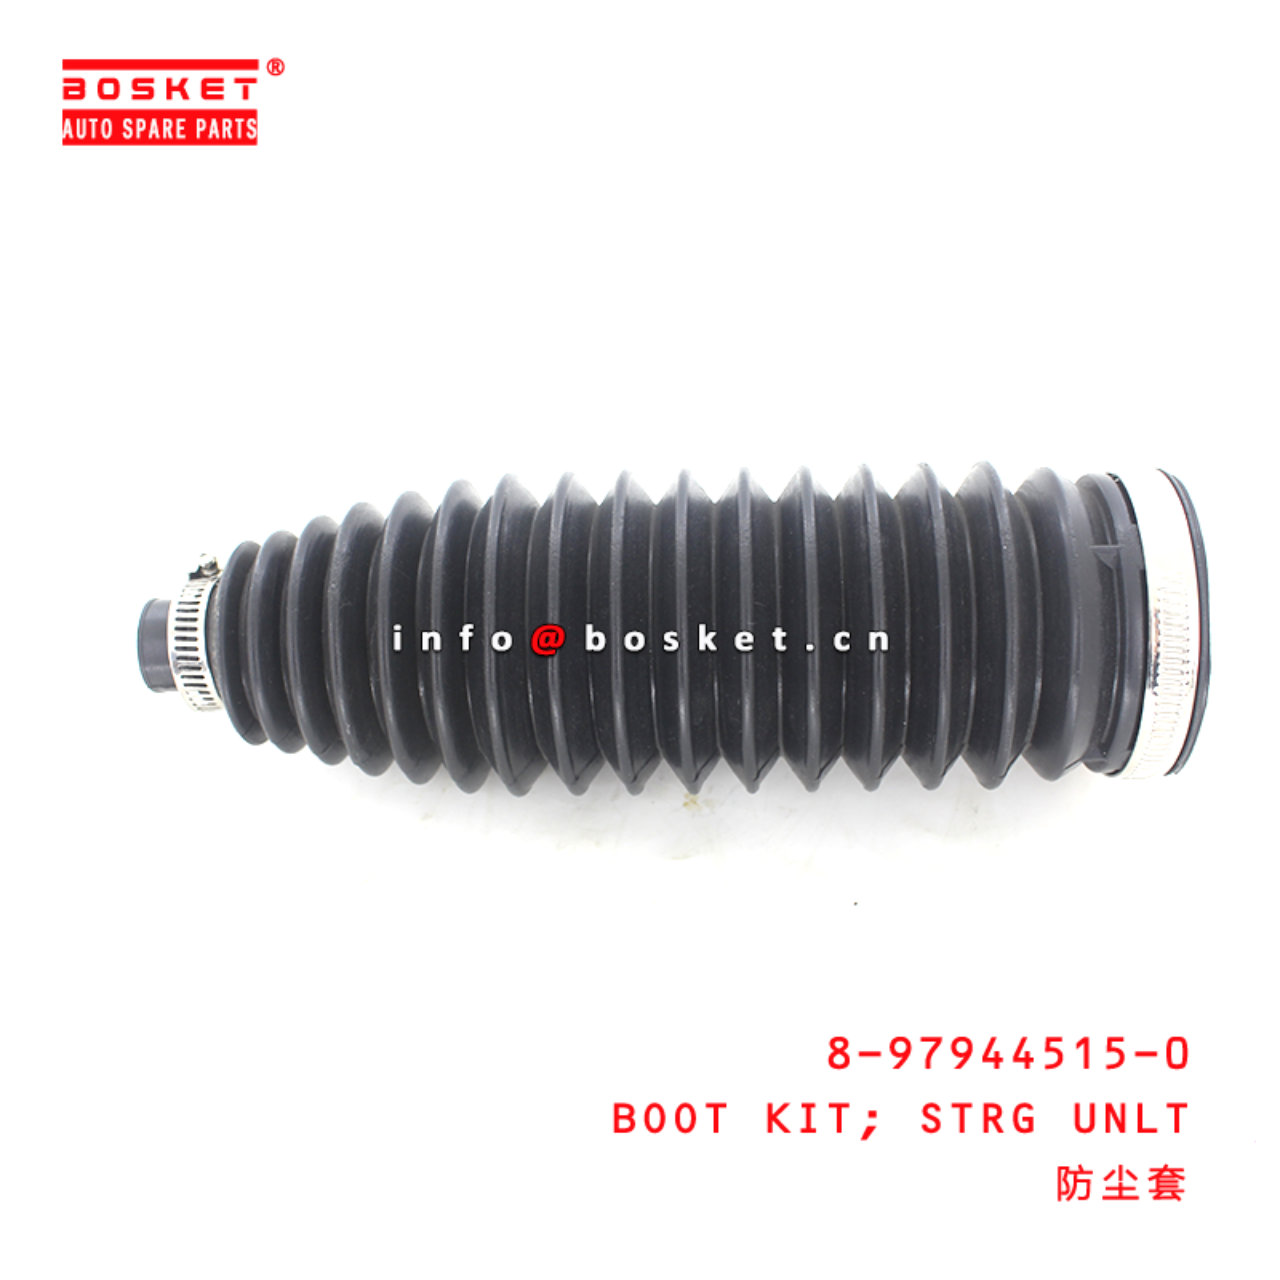  8-97944515-0 Steering Unlt Boot Kit 8979445150 Suitable for ISUZU DMAX 4X4